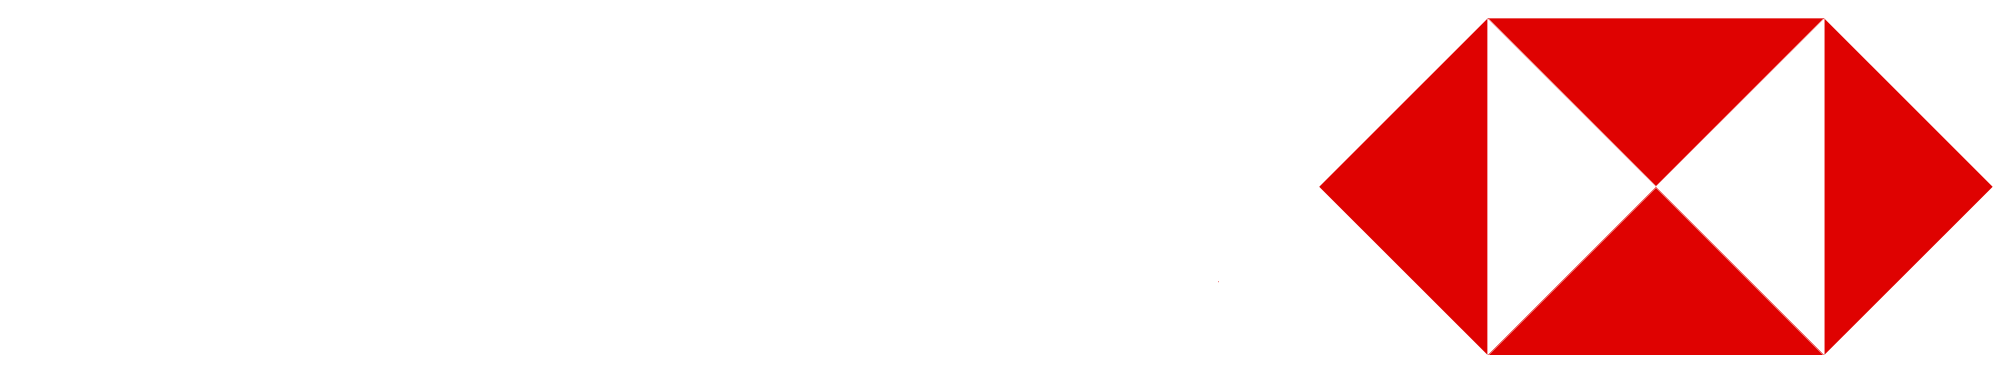 HSBC Logo Transparent Background